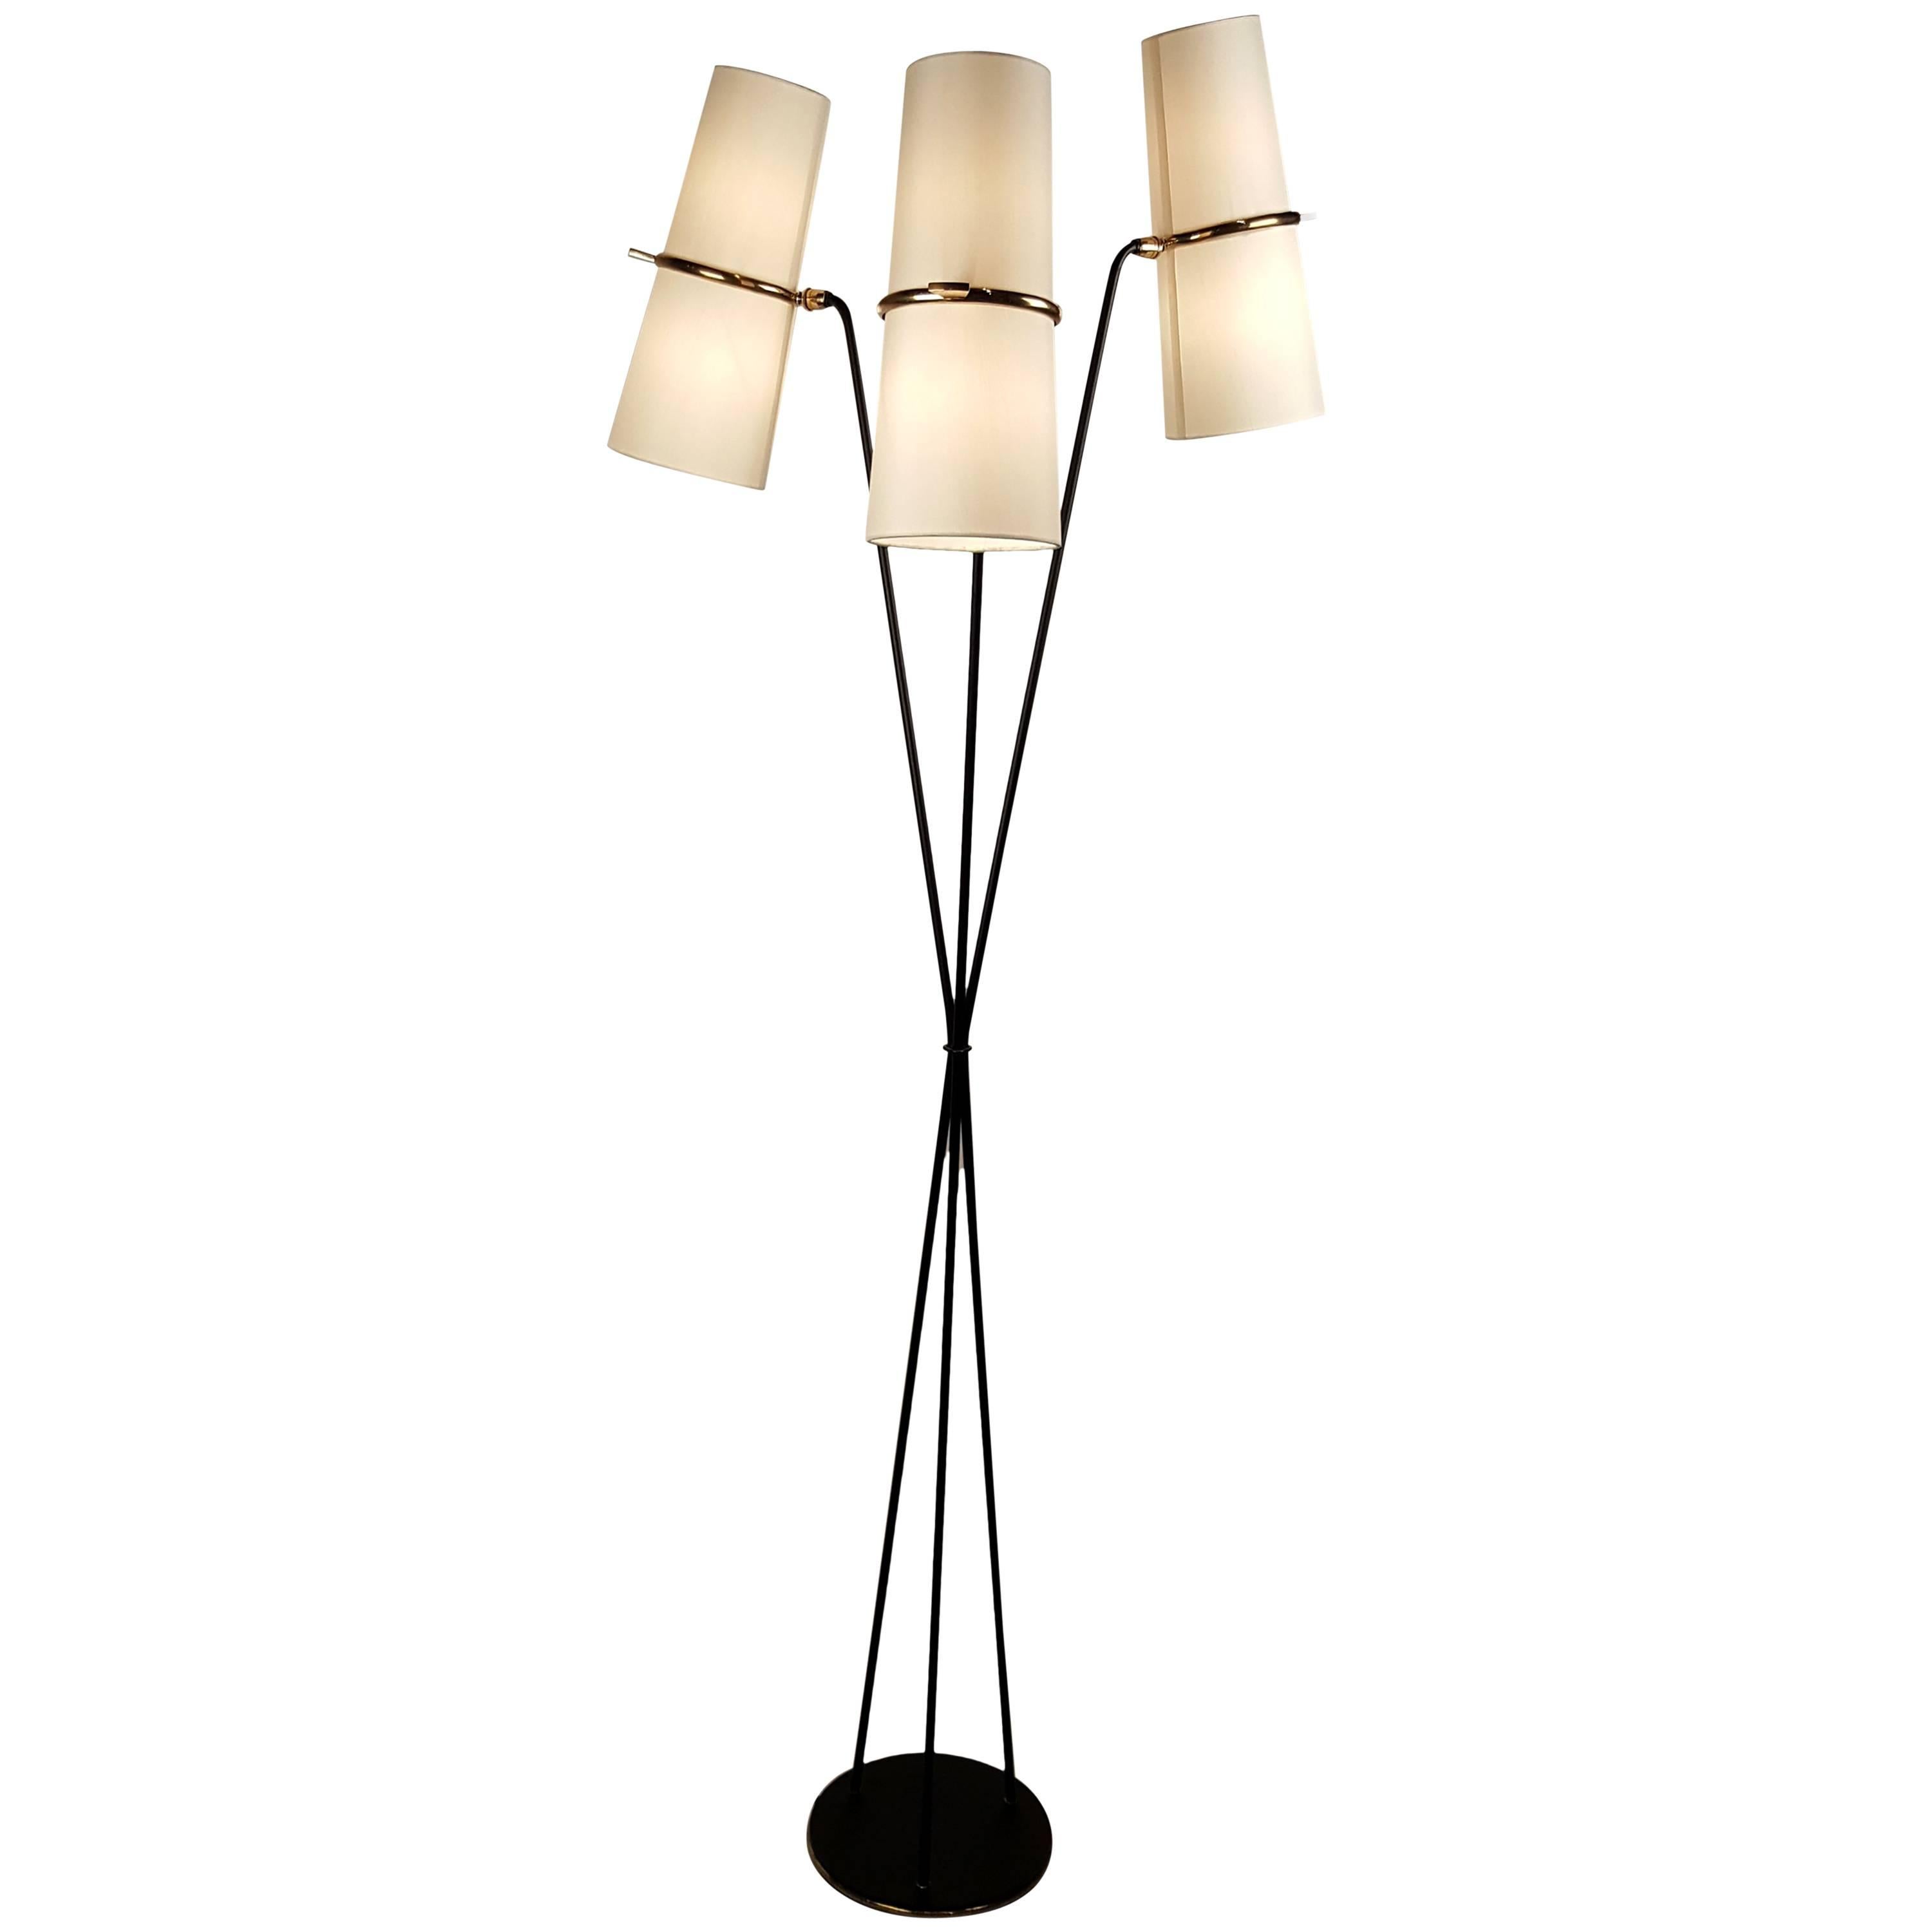 Elegant French Modernist Three-Arm Floor Lamp By Maison Lunel